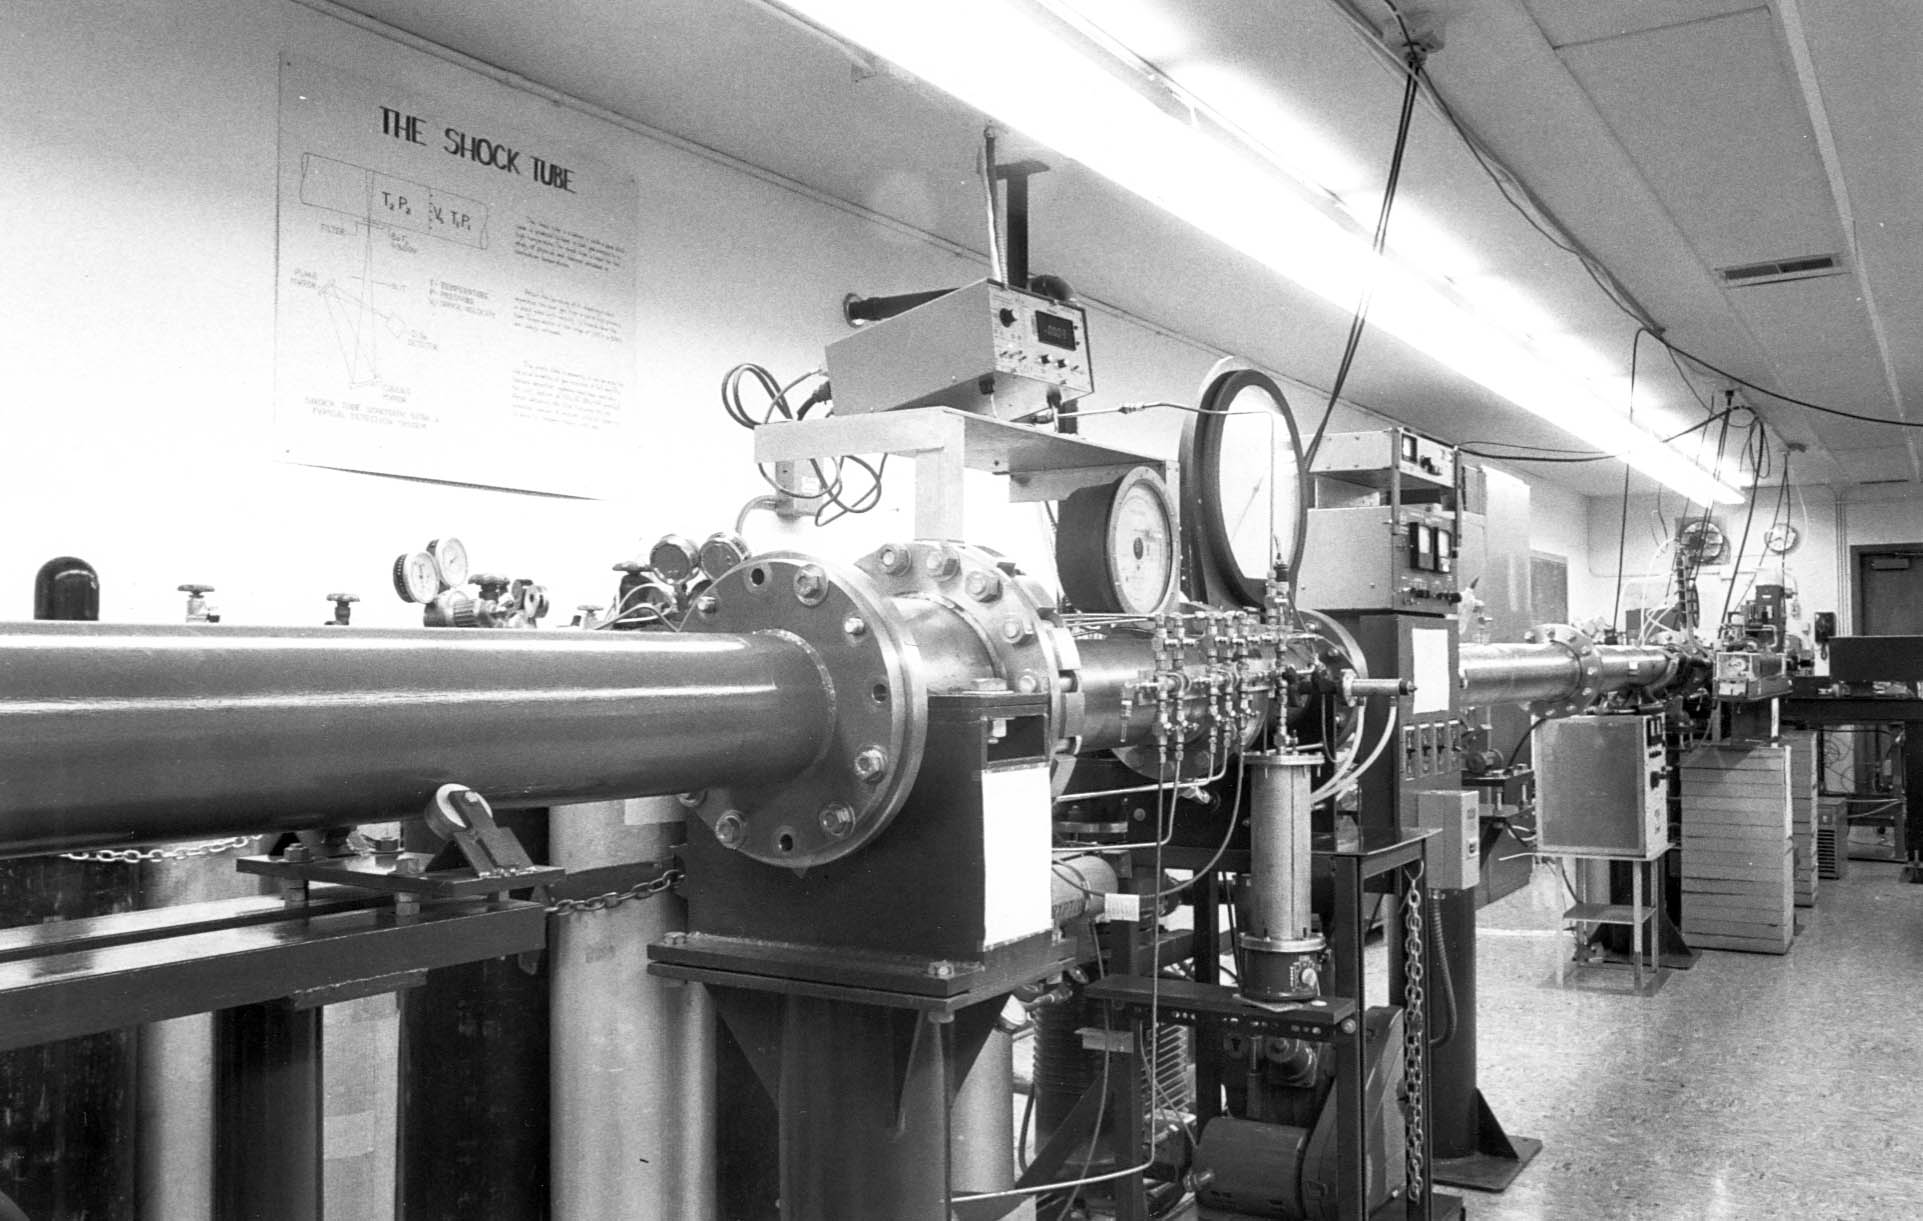 Stanford shock tube, circa 1981